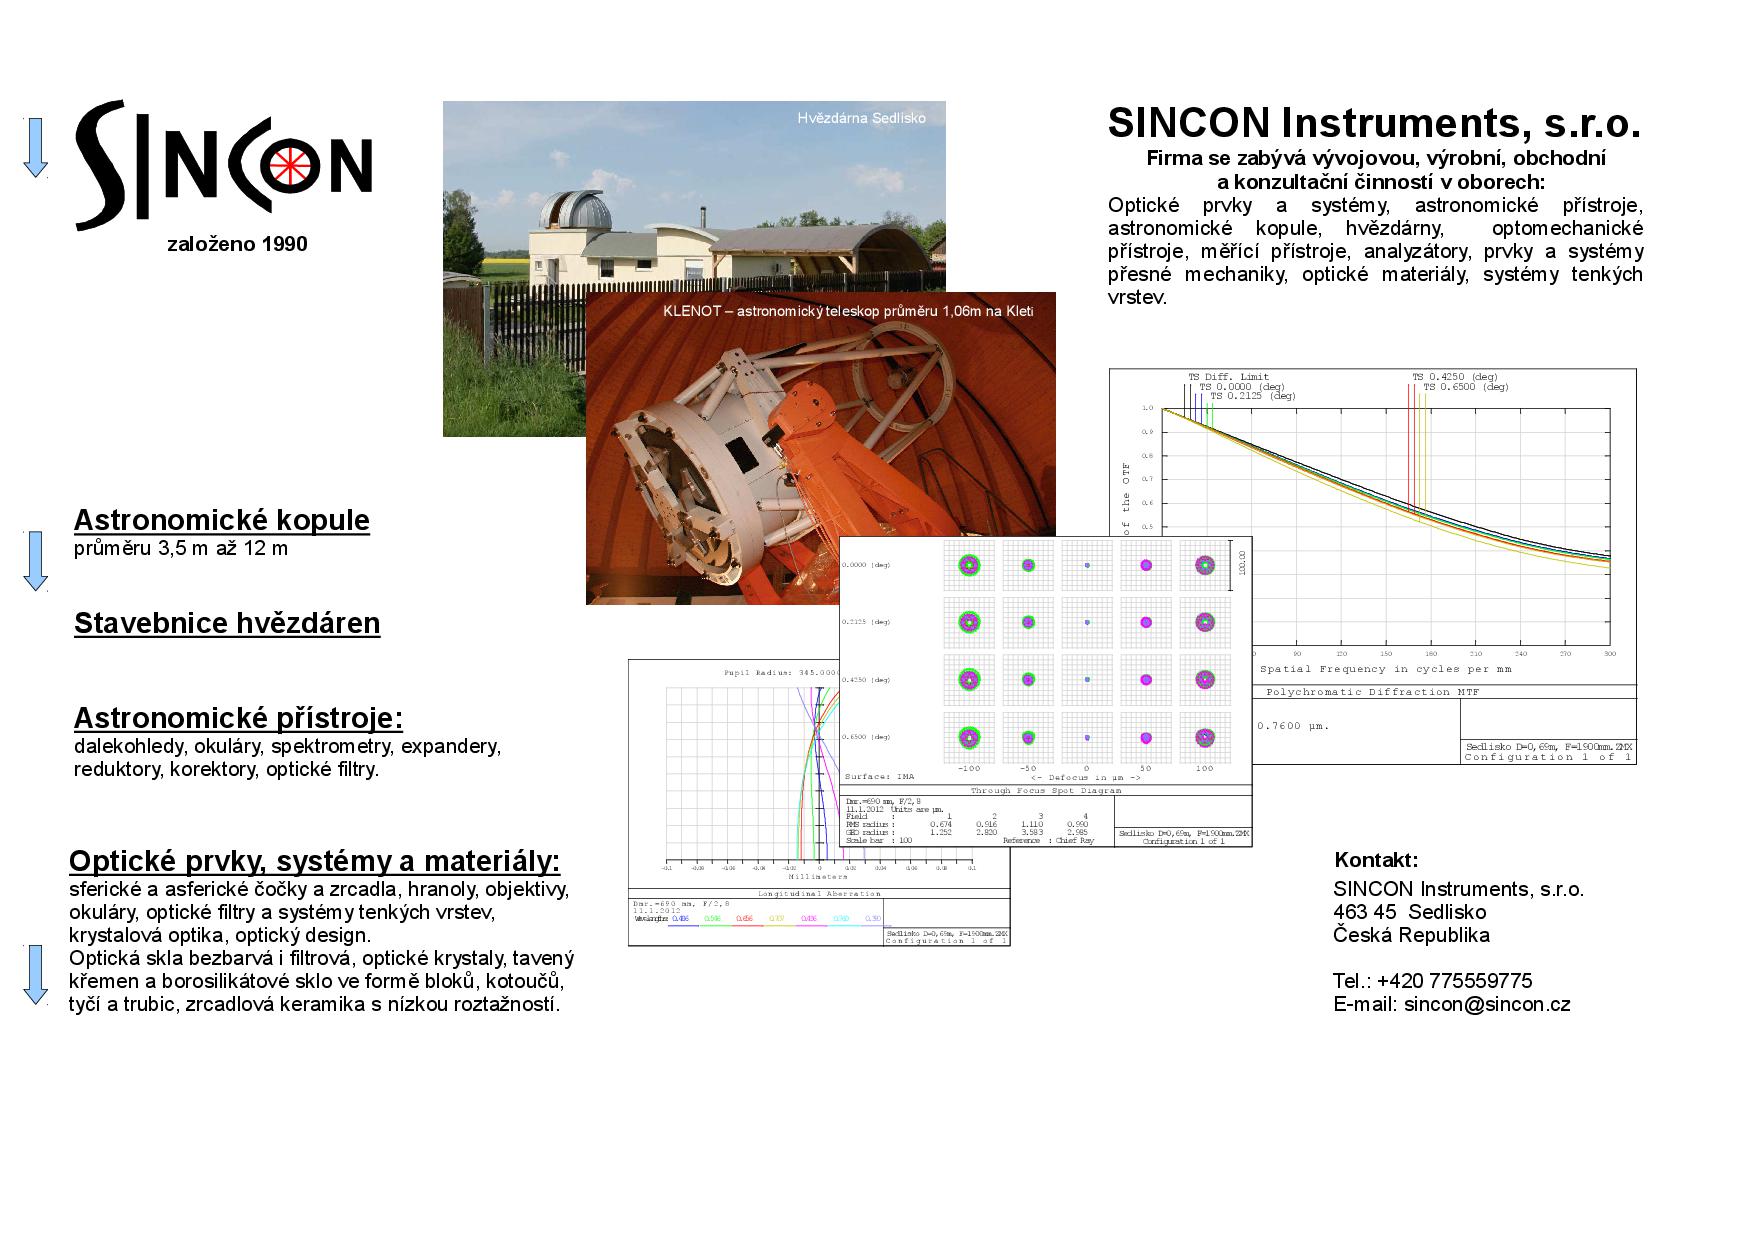 SINCON Instruments, optika, pstroje, astronomick teleskopy, dalekohledy, vvoj, vroba